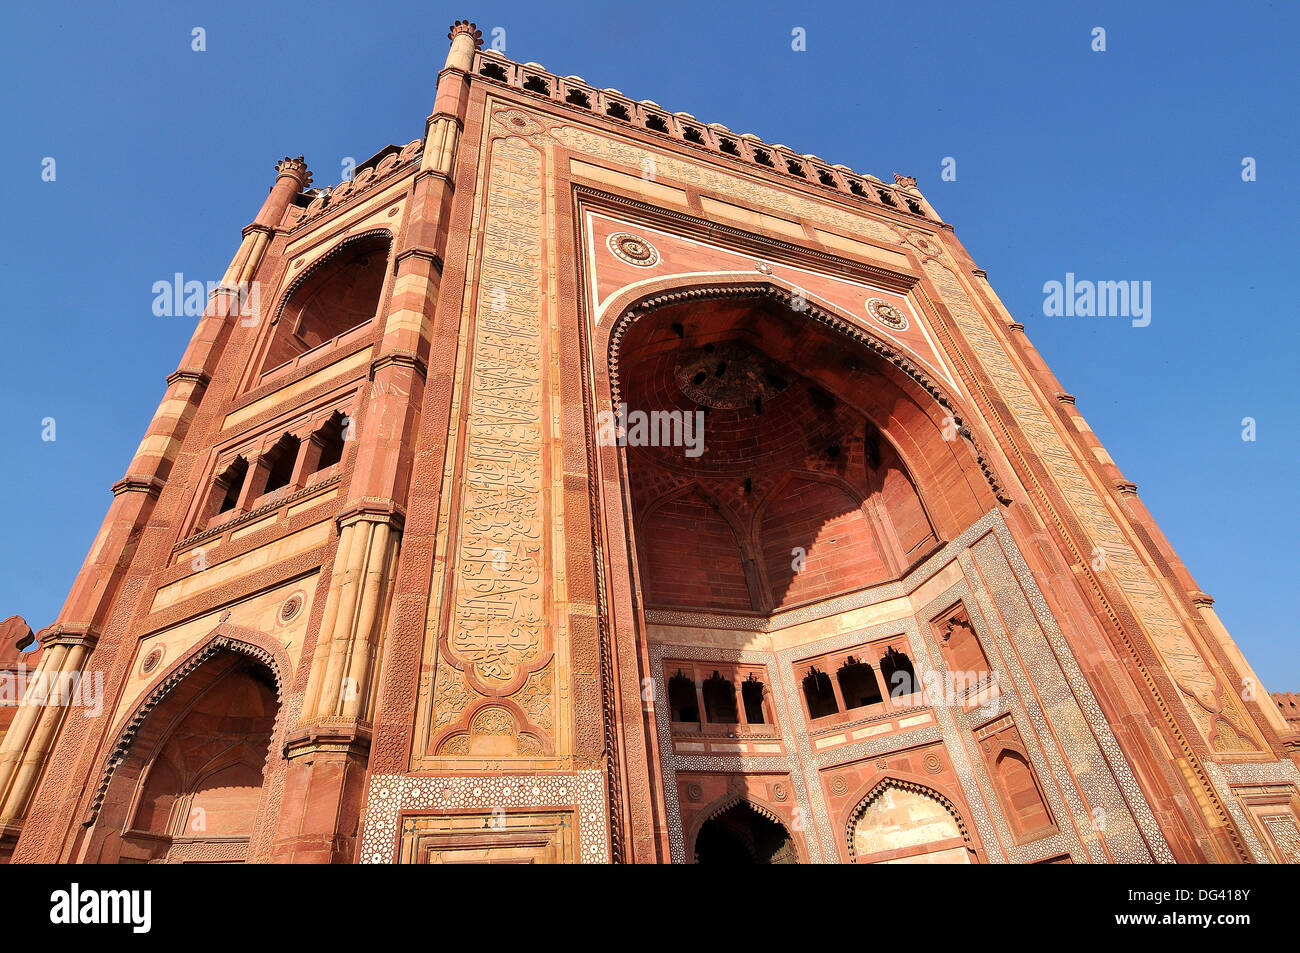 Porta monumentale (Buland Darwaza), Jama Masjid moschea, Fatehpur Sikri, Sito Patrimonio Mondiale dell'UNESCO, Uttar Pradesh, India, Asia Foto Stock